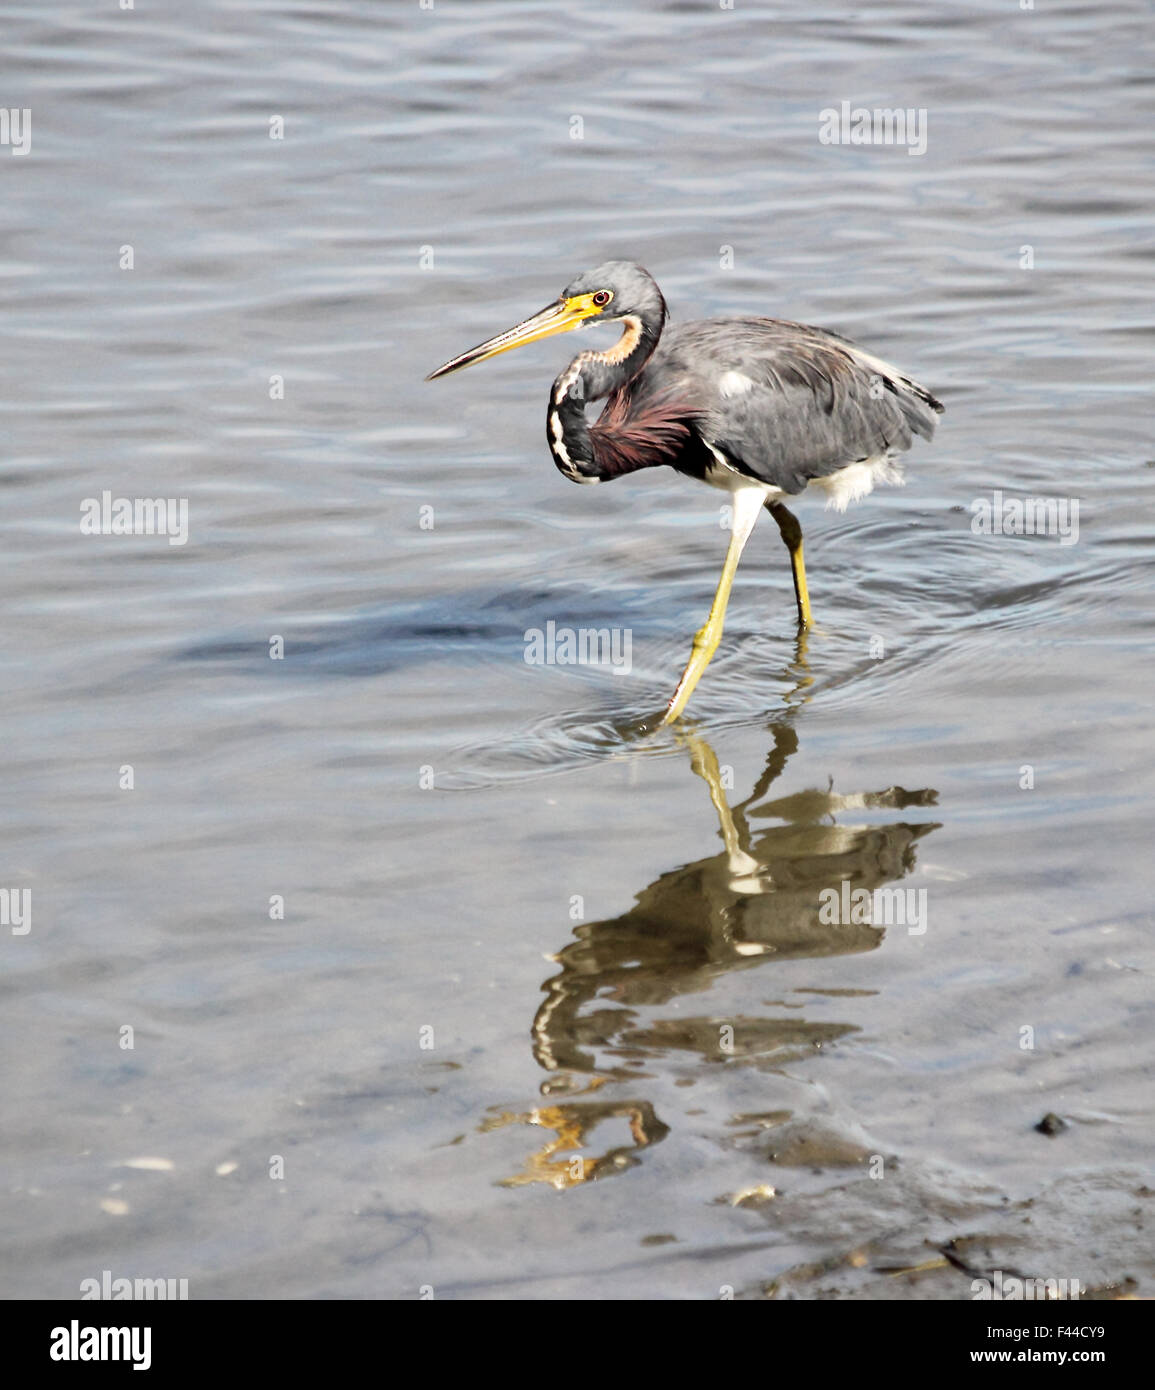 A Tri-colored heron wading in a coastal estuary Stock Photo